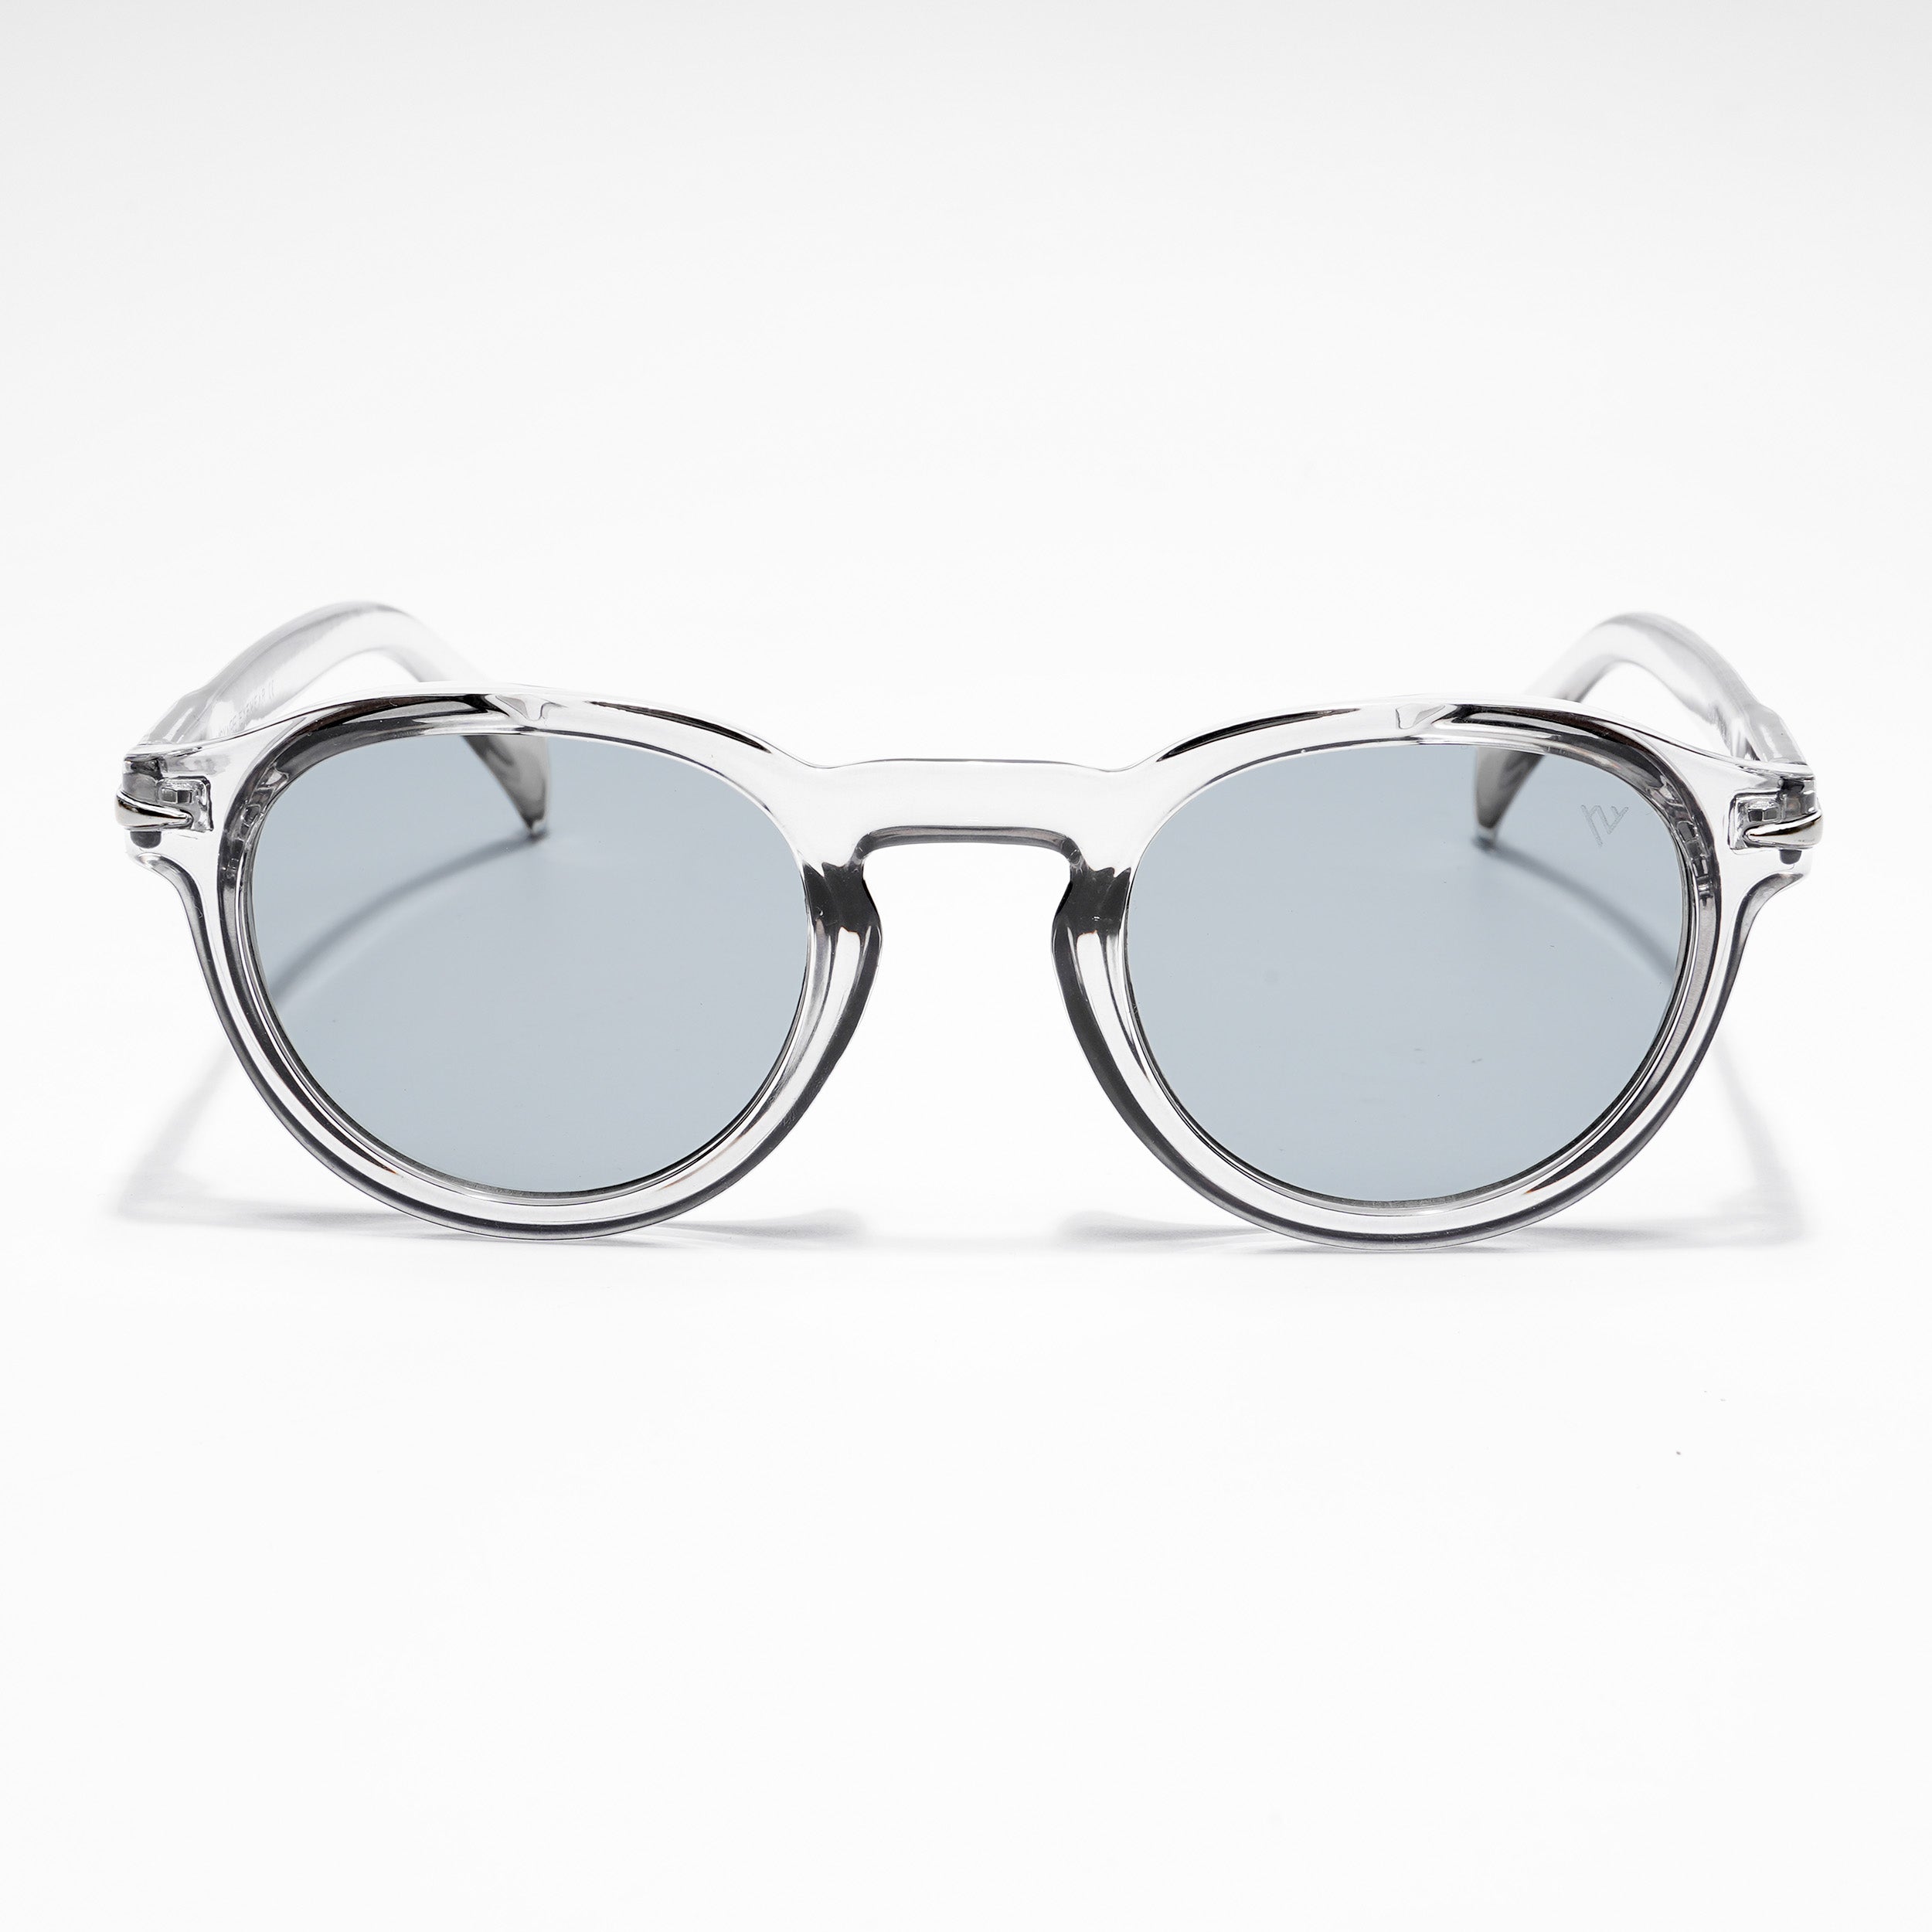 Voyage Crystal Round Sunglasses - MG3608